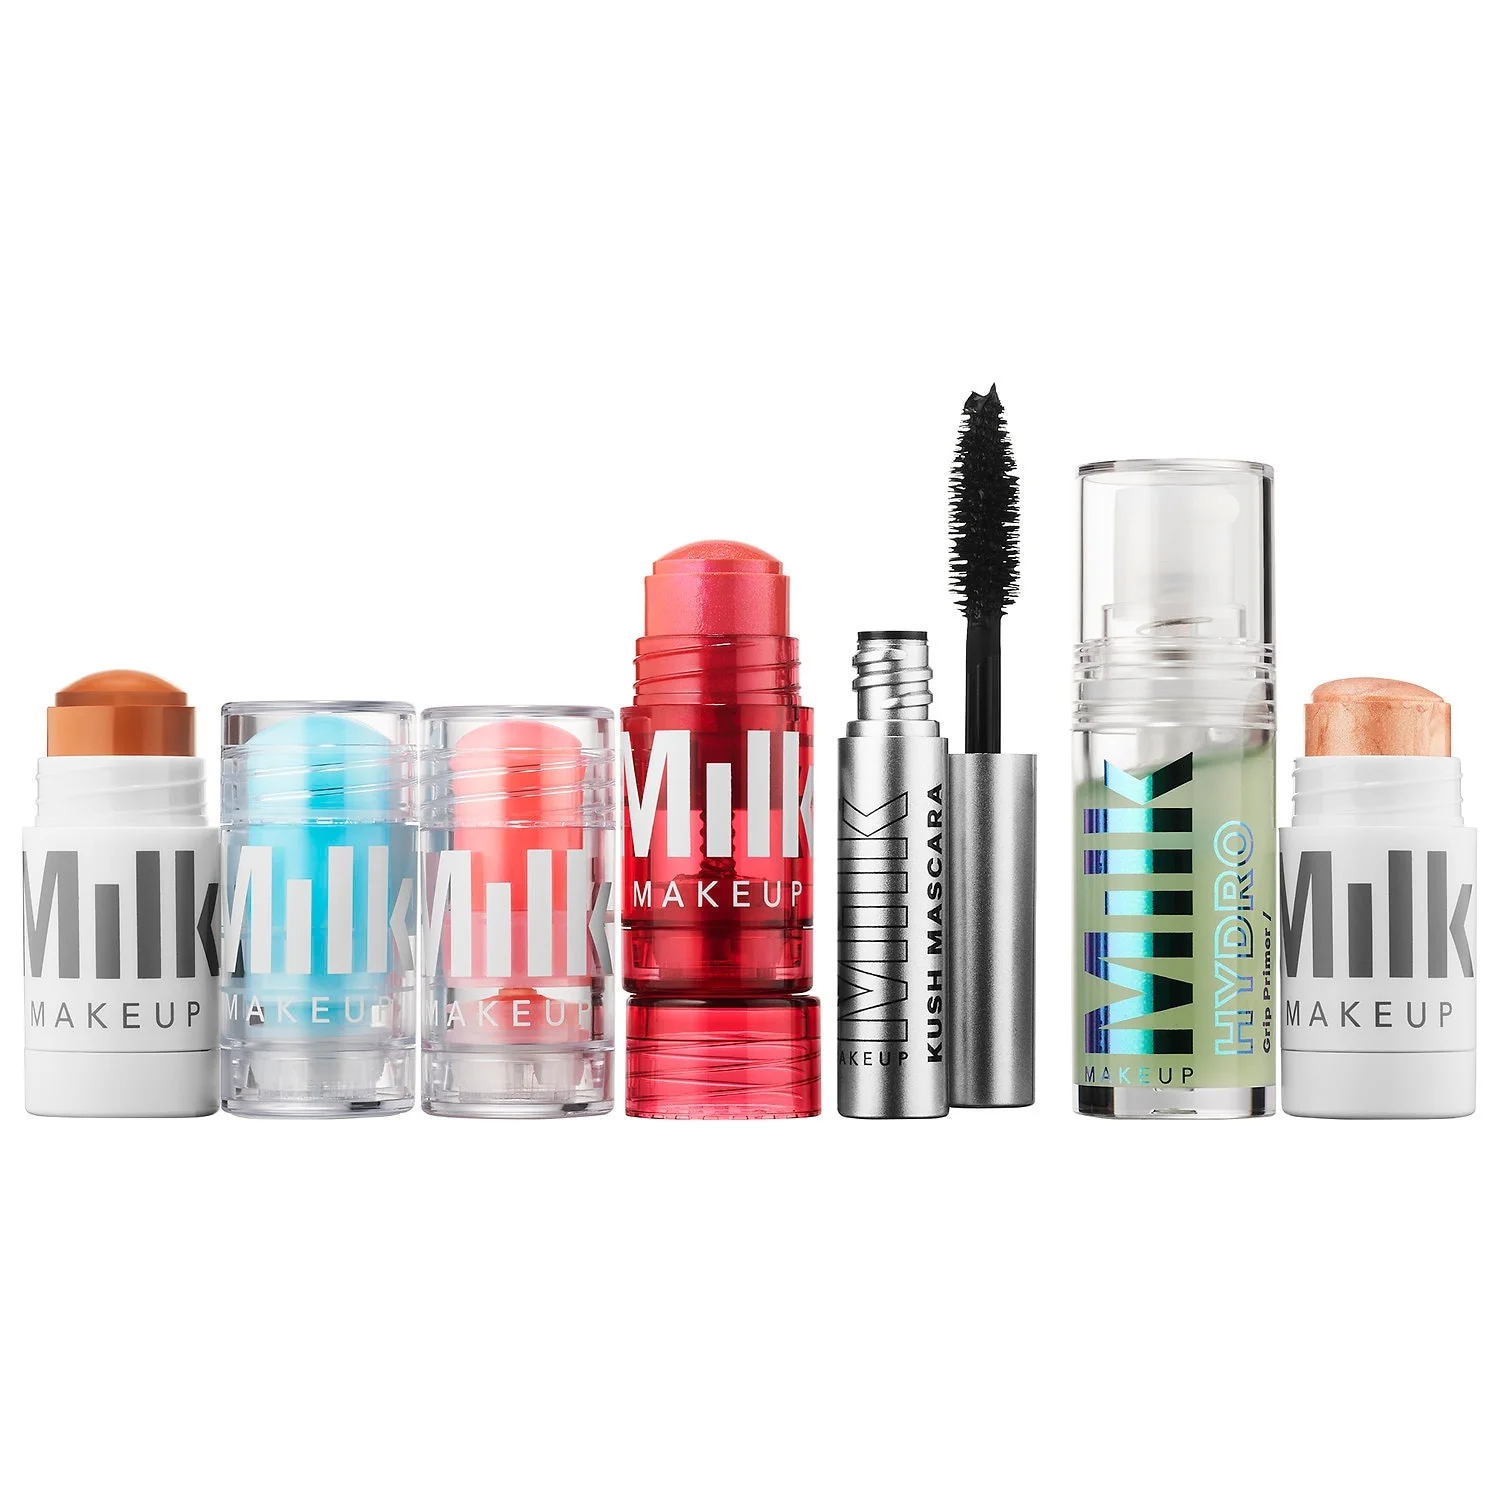 Sephora LE Milk Makeup MVPs Set Review - February 2020